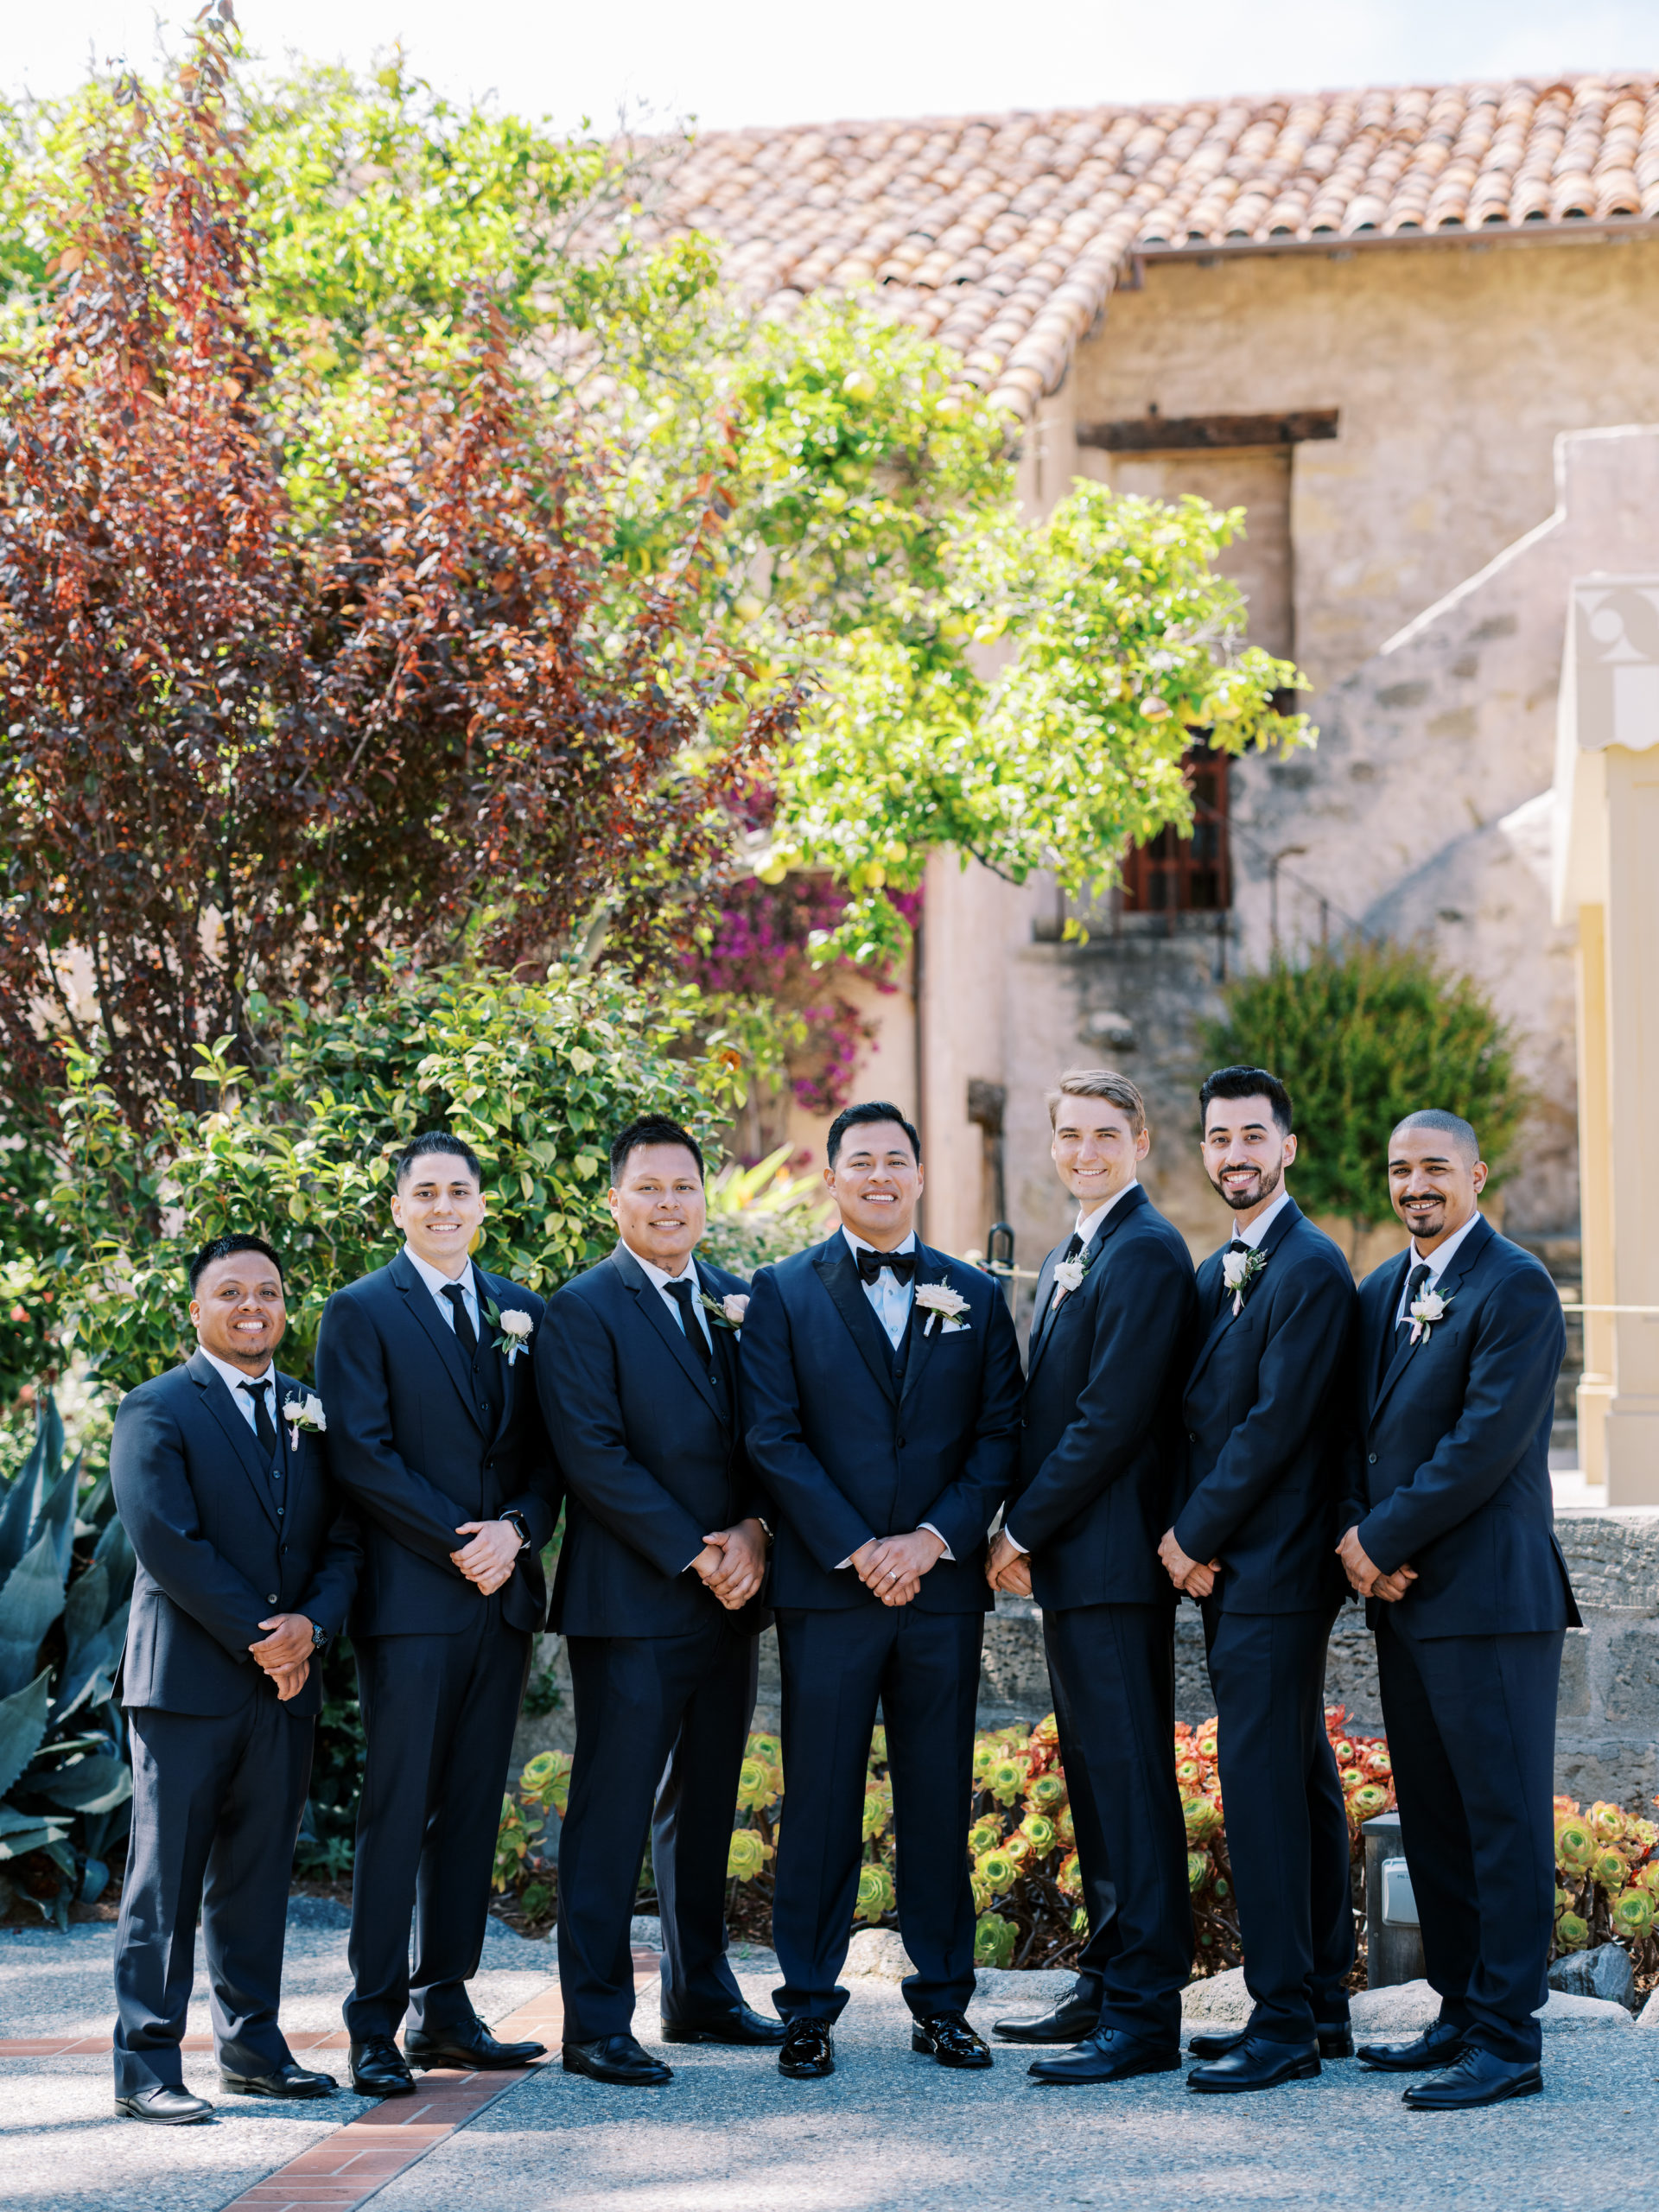 Tehama Golf Club Wedding - Groomsmen UCLA Alumni Harvard Medical School Alum